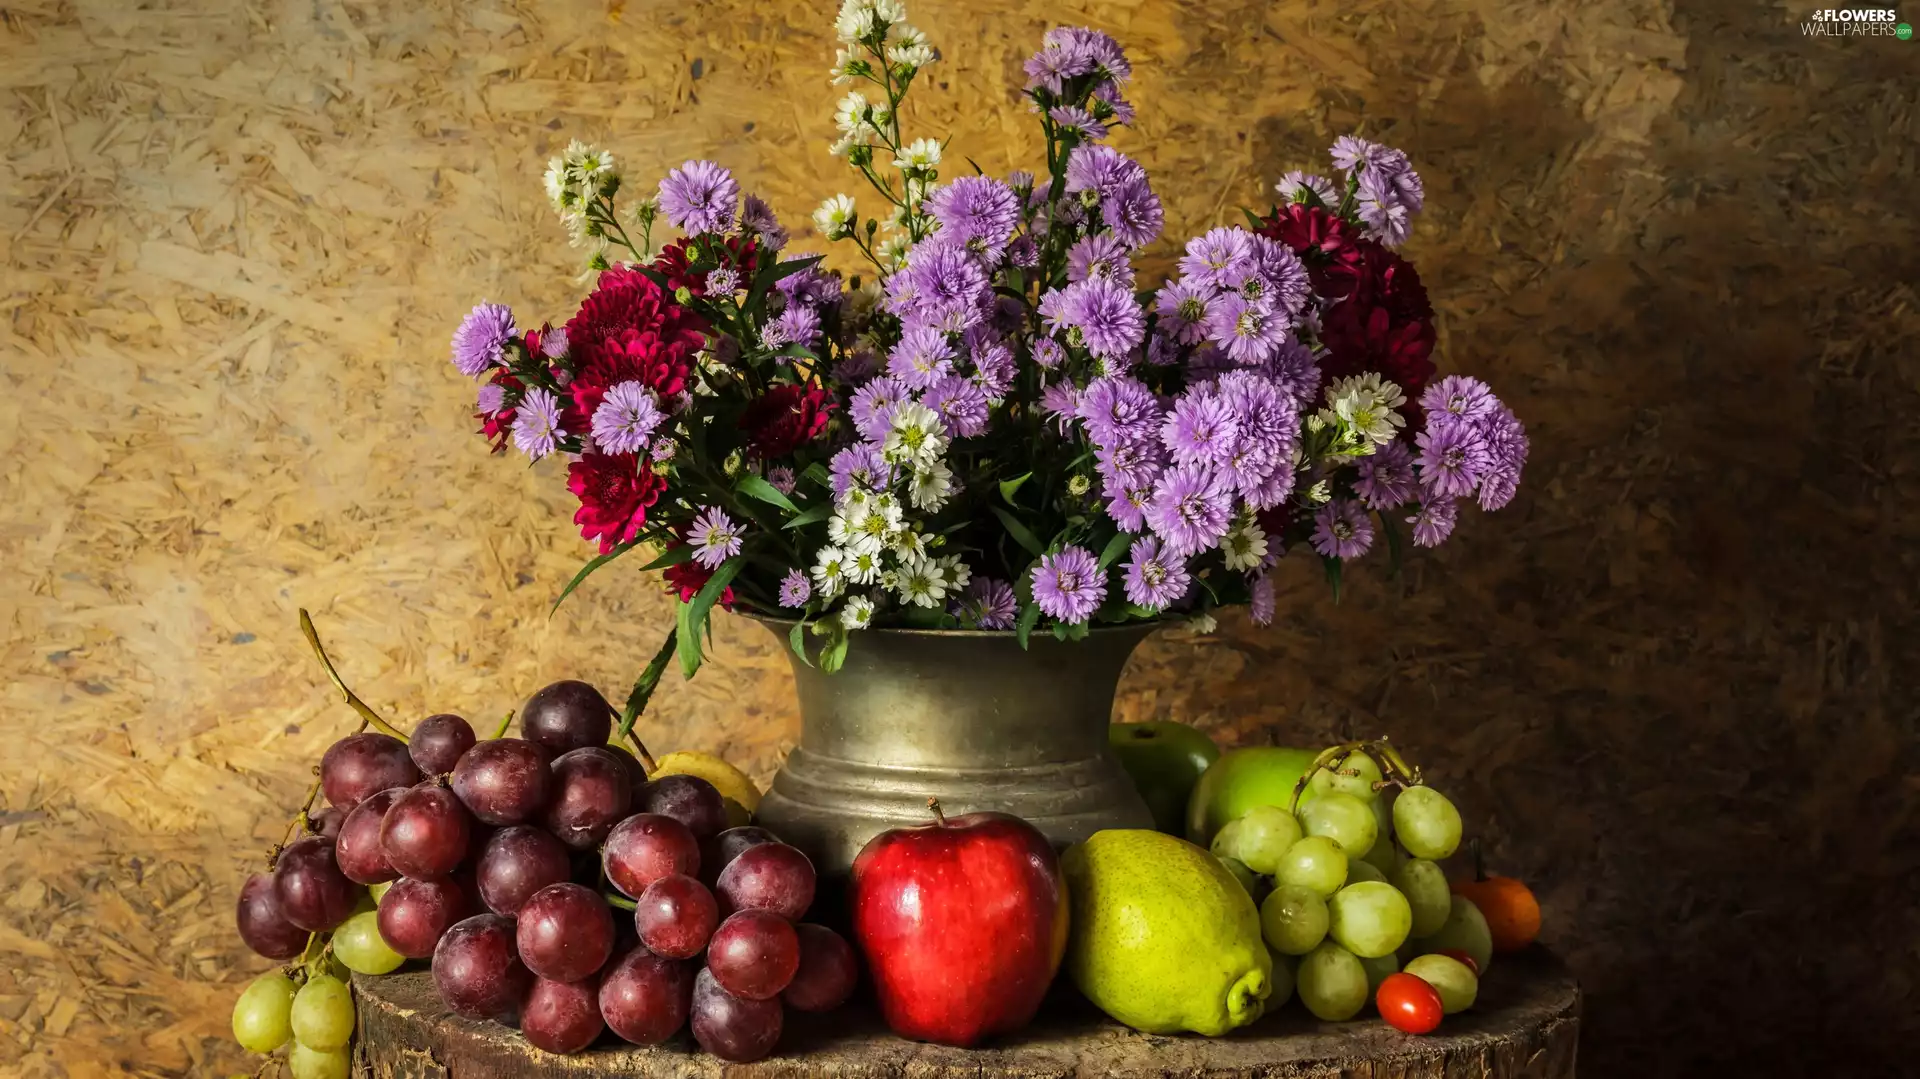 Vase, Fruits, composition, Grapes, Truck concrete mixer, Aster, Flowers, apples